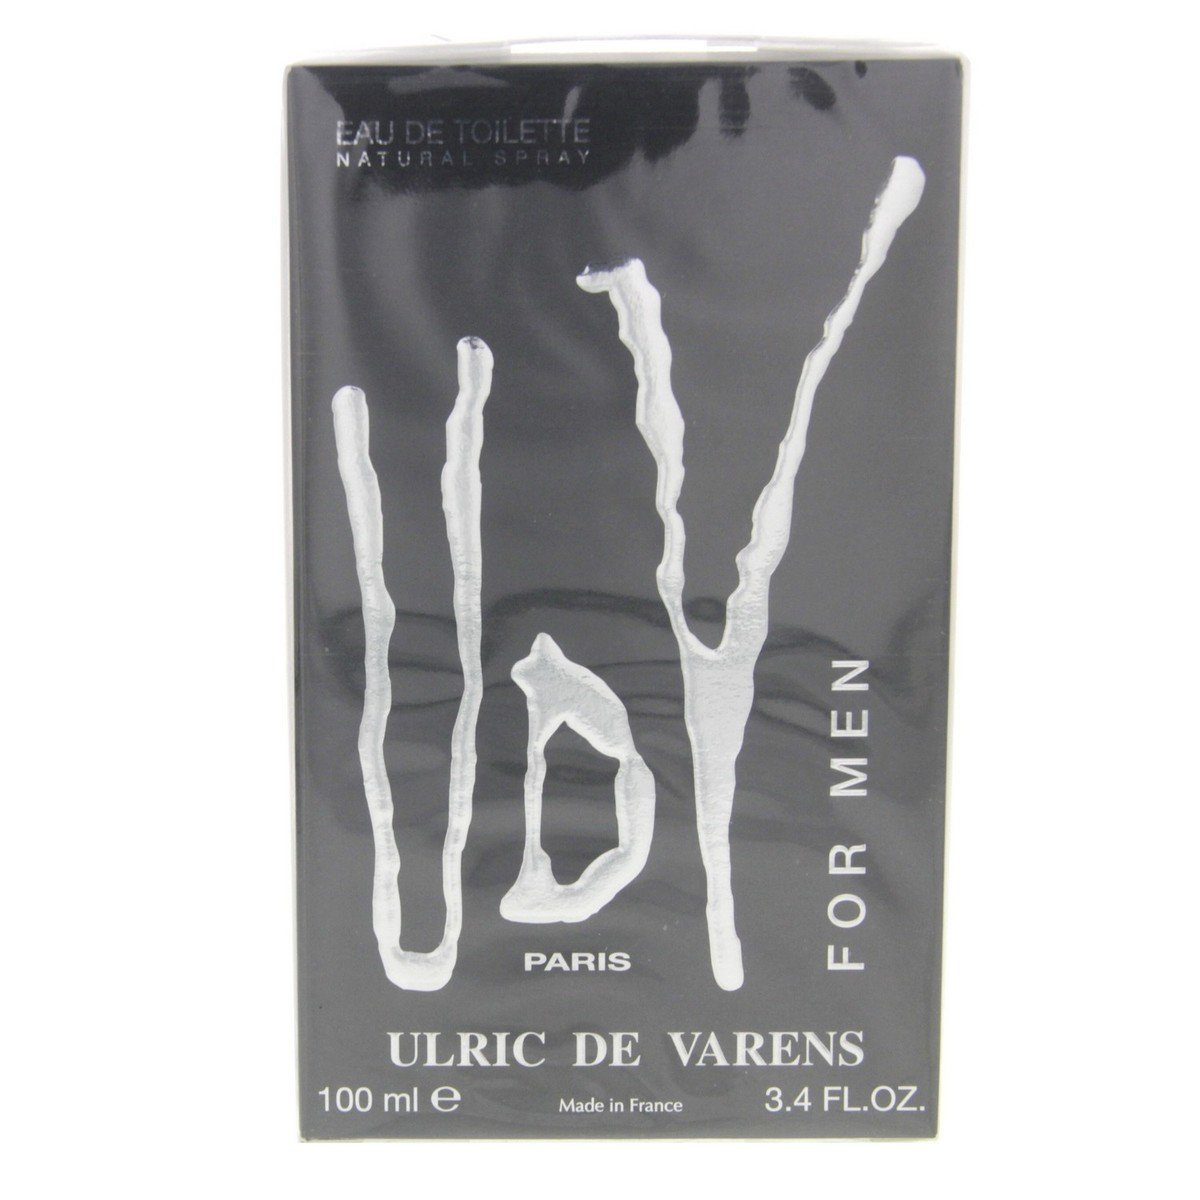 Buy Ulric De Varens EDT Paris for Men 100 ml Online at Best Price | Eau De Toilette -Men | Lulu KSA in UAE